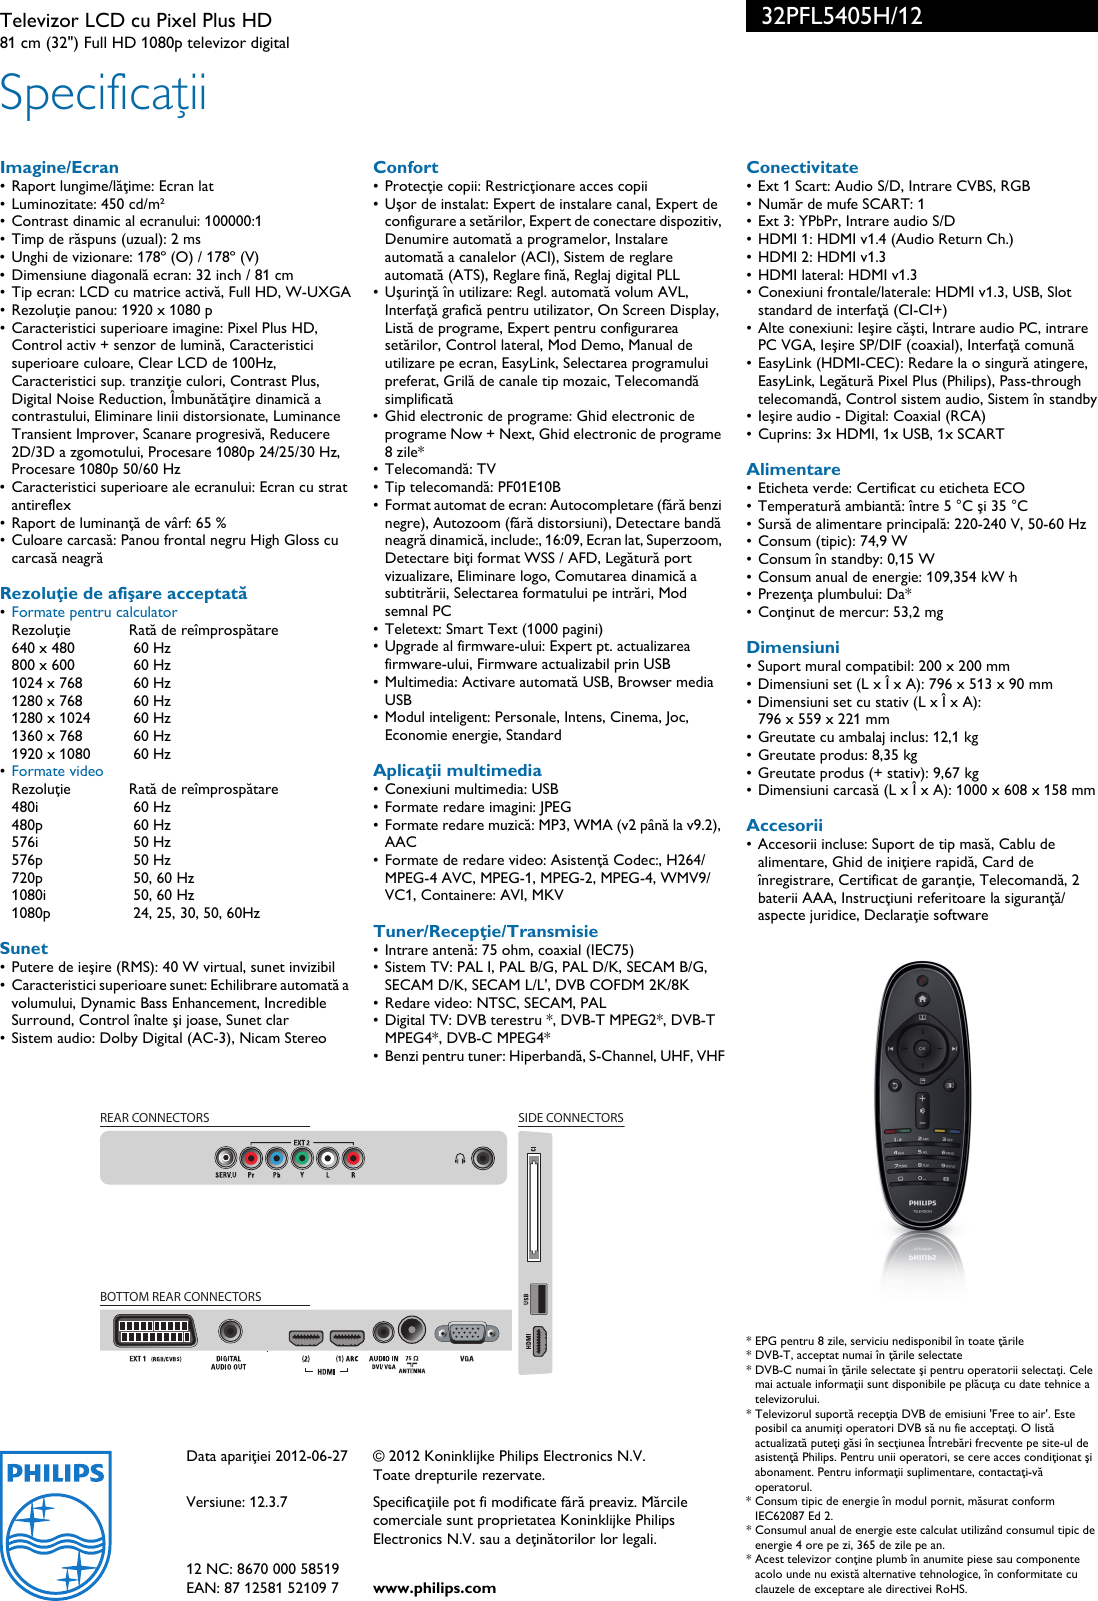 Page 3 of 3 - Philips 32PFL5405H/12 Televizor LCD Cu Pixel Plus HD User Manual Pliant 32pfl5405h 12 Pss Ronro